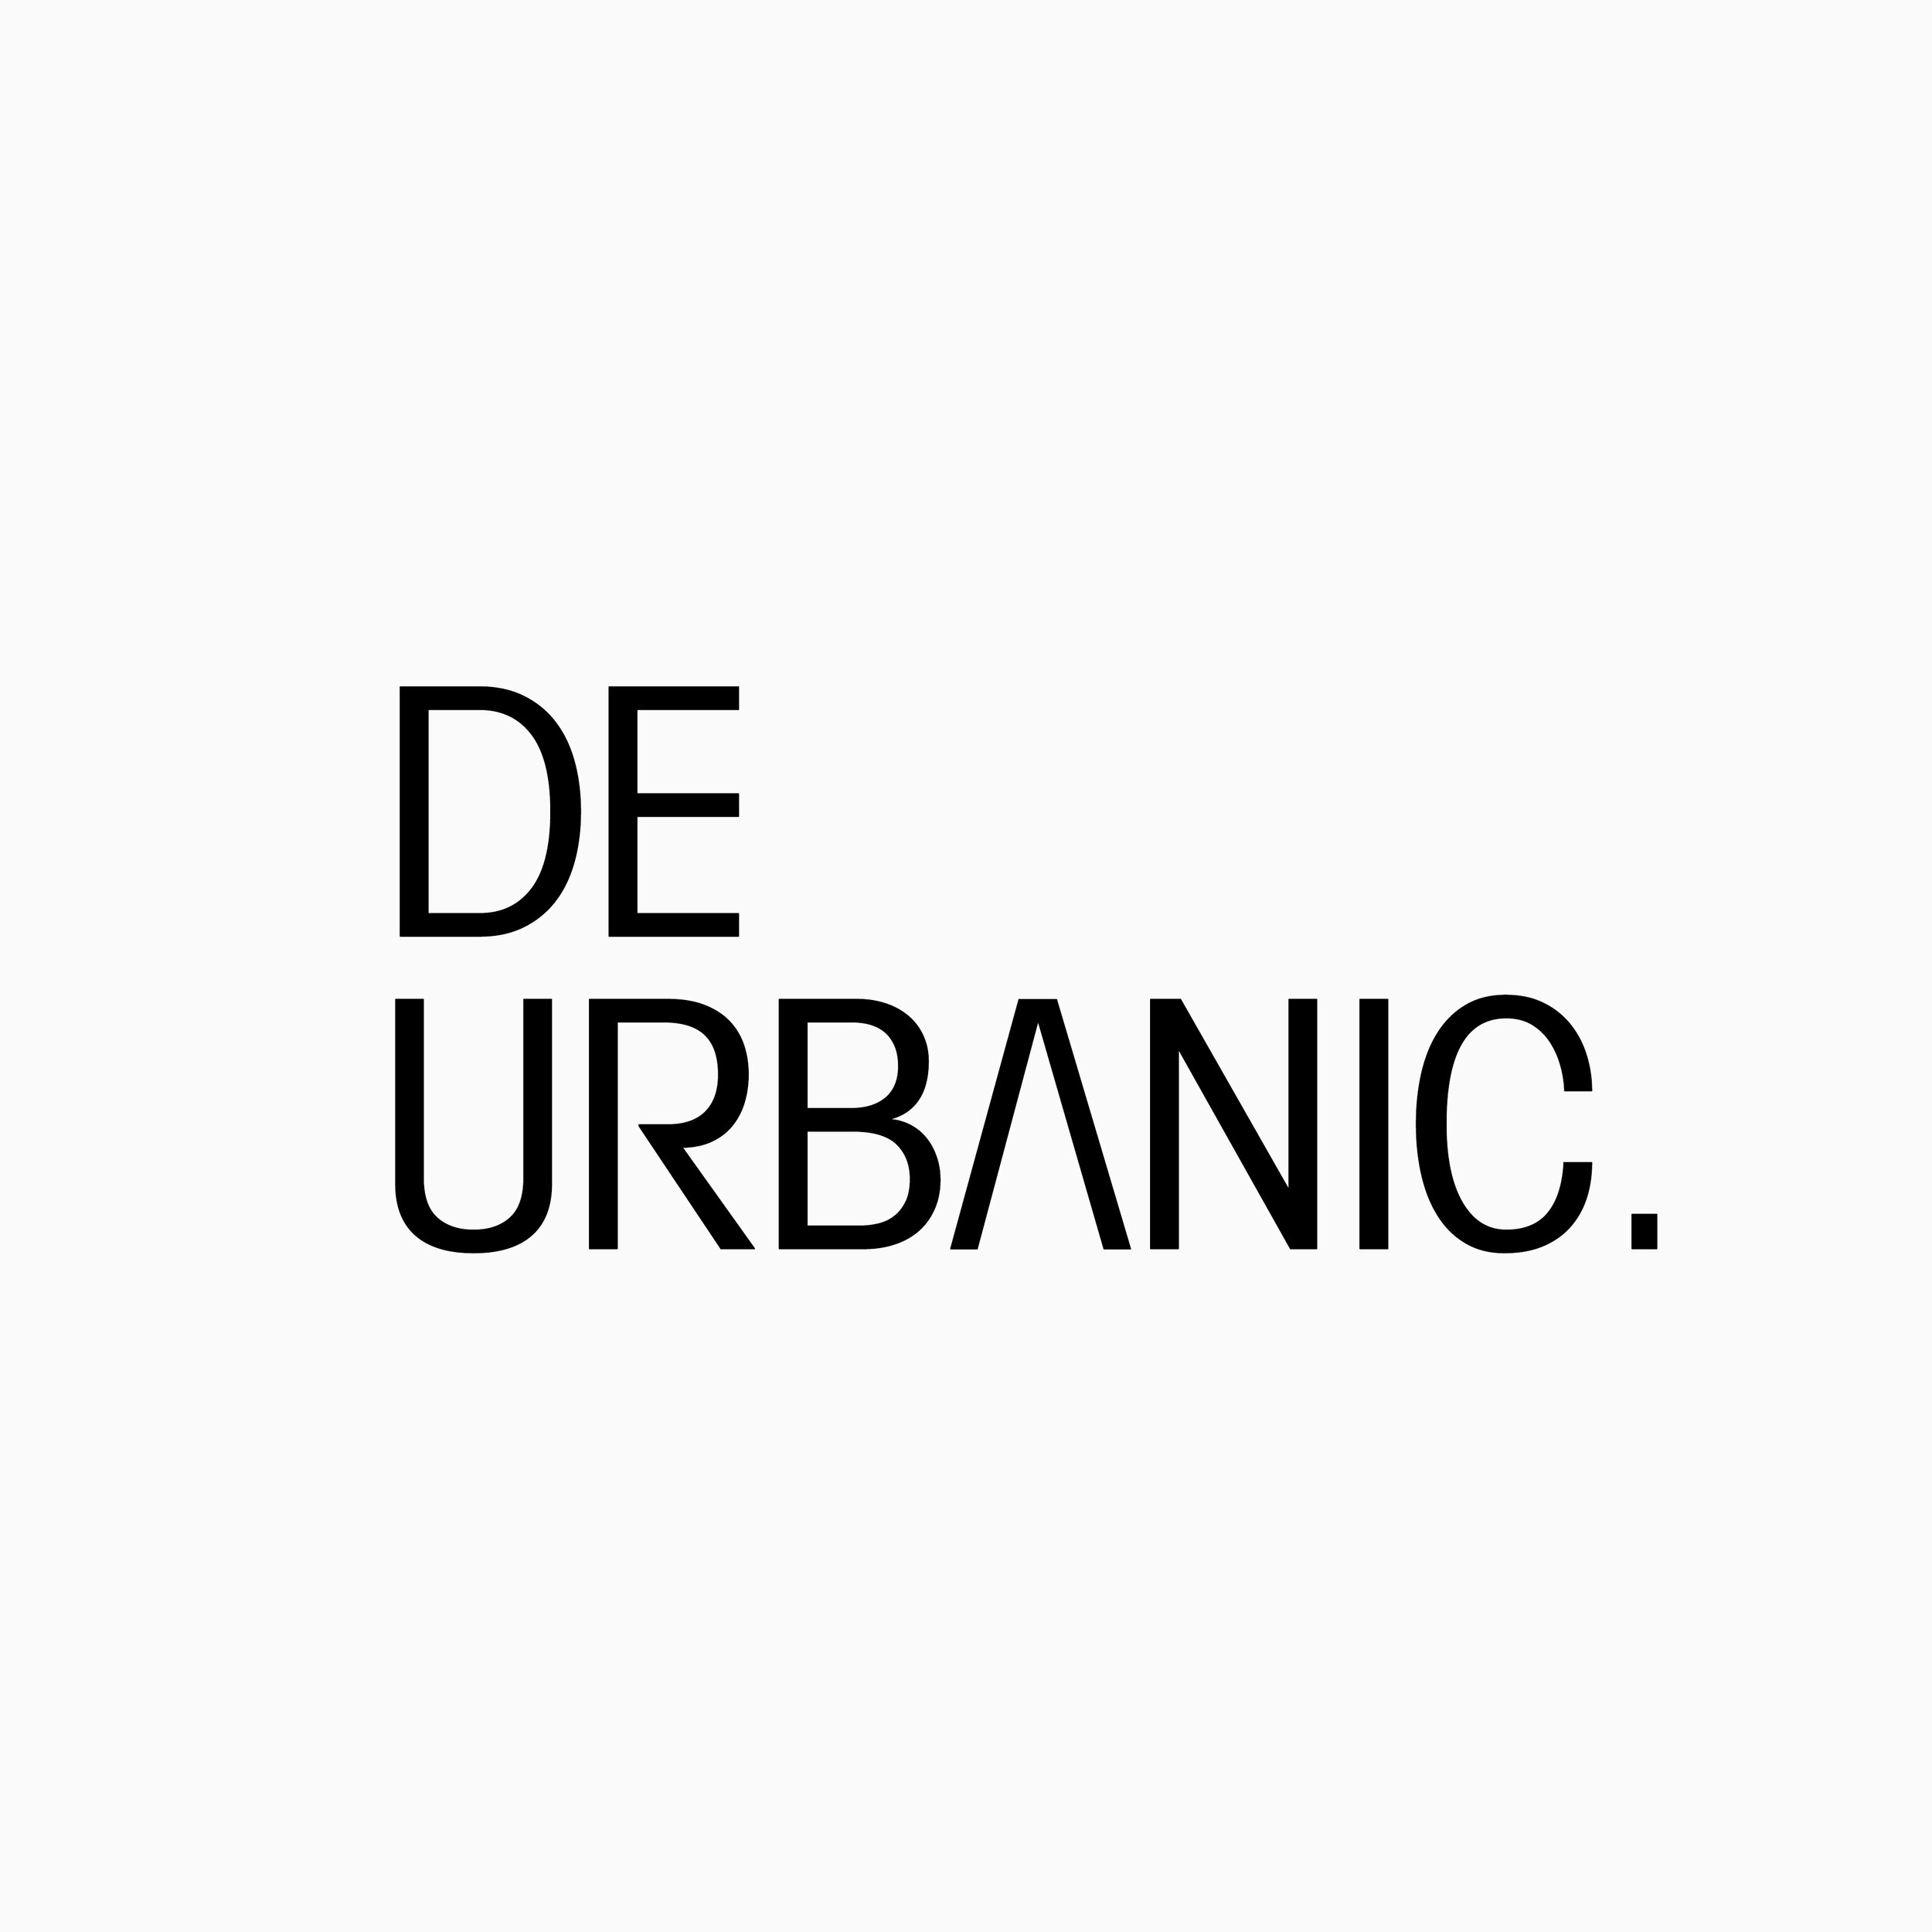 How To Pronounce Urbanic - YouTube